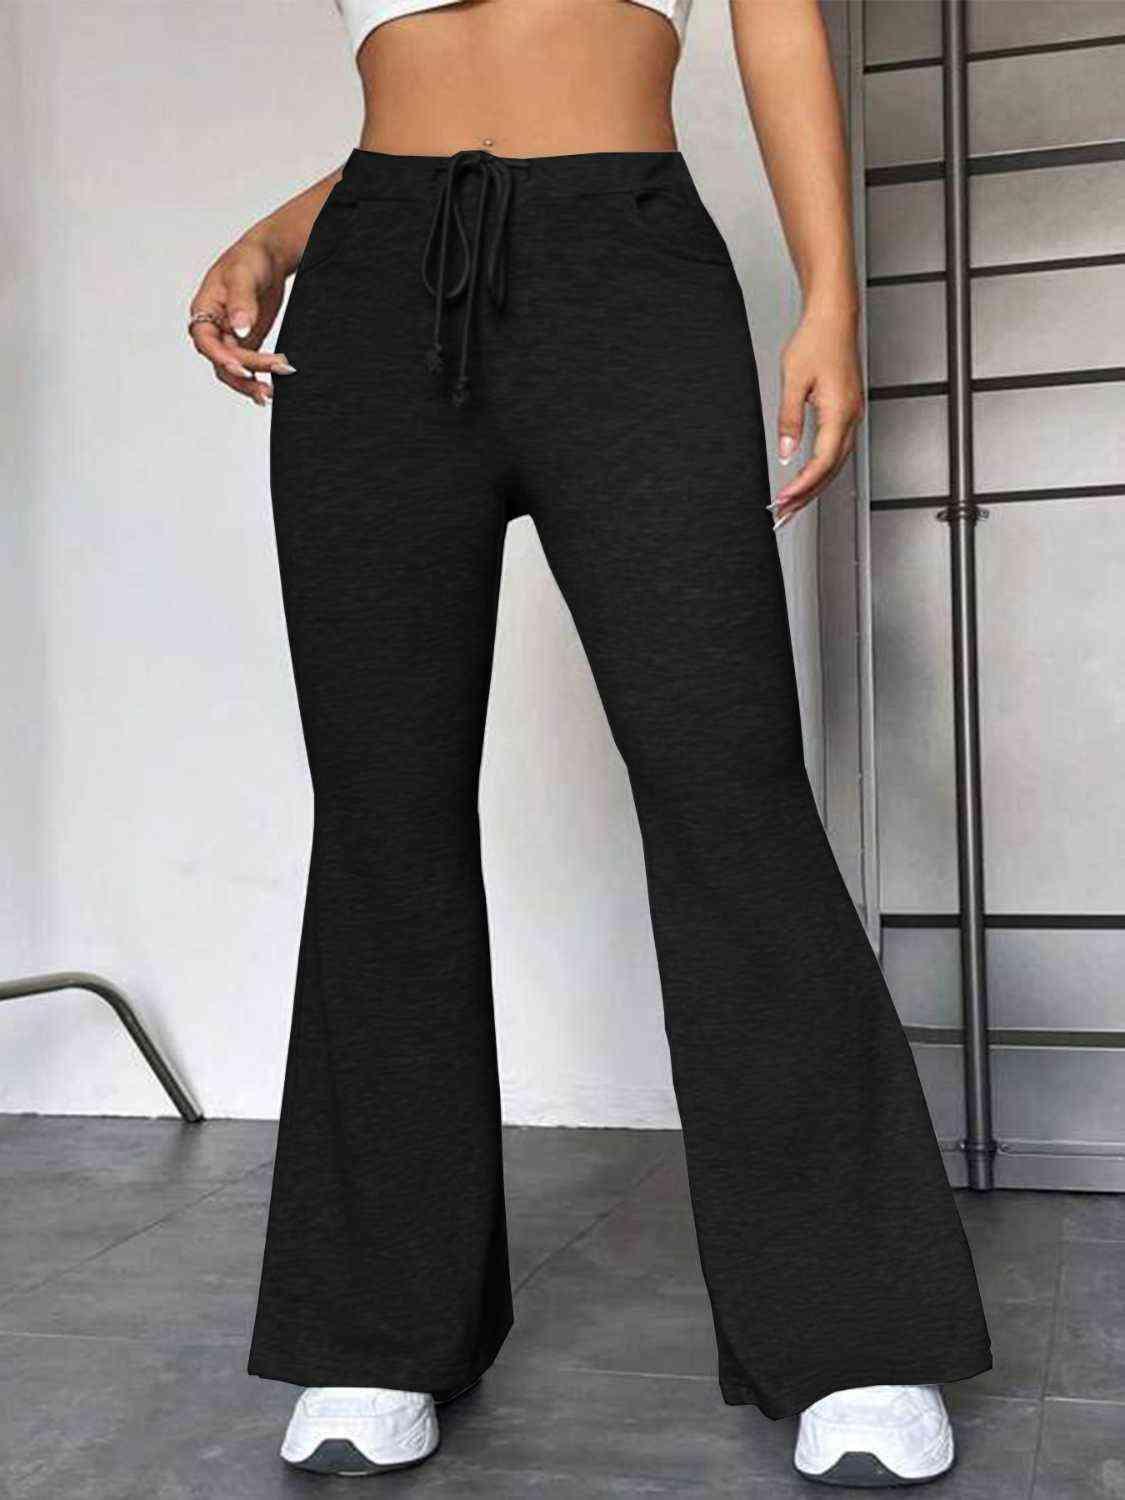 Bona Fide Fashion - Drawstring Sweatpants with Pockets - Women Fashion - Bona Fide Fashion